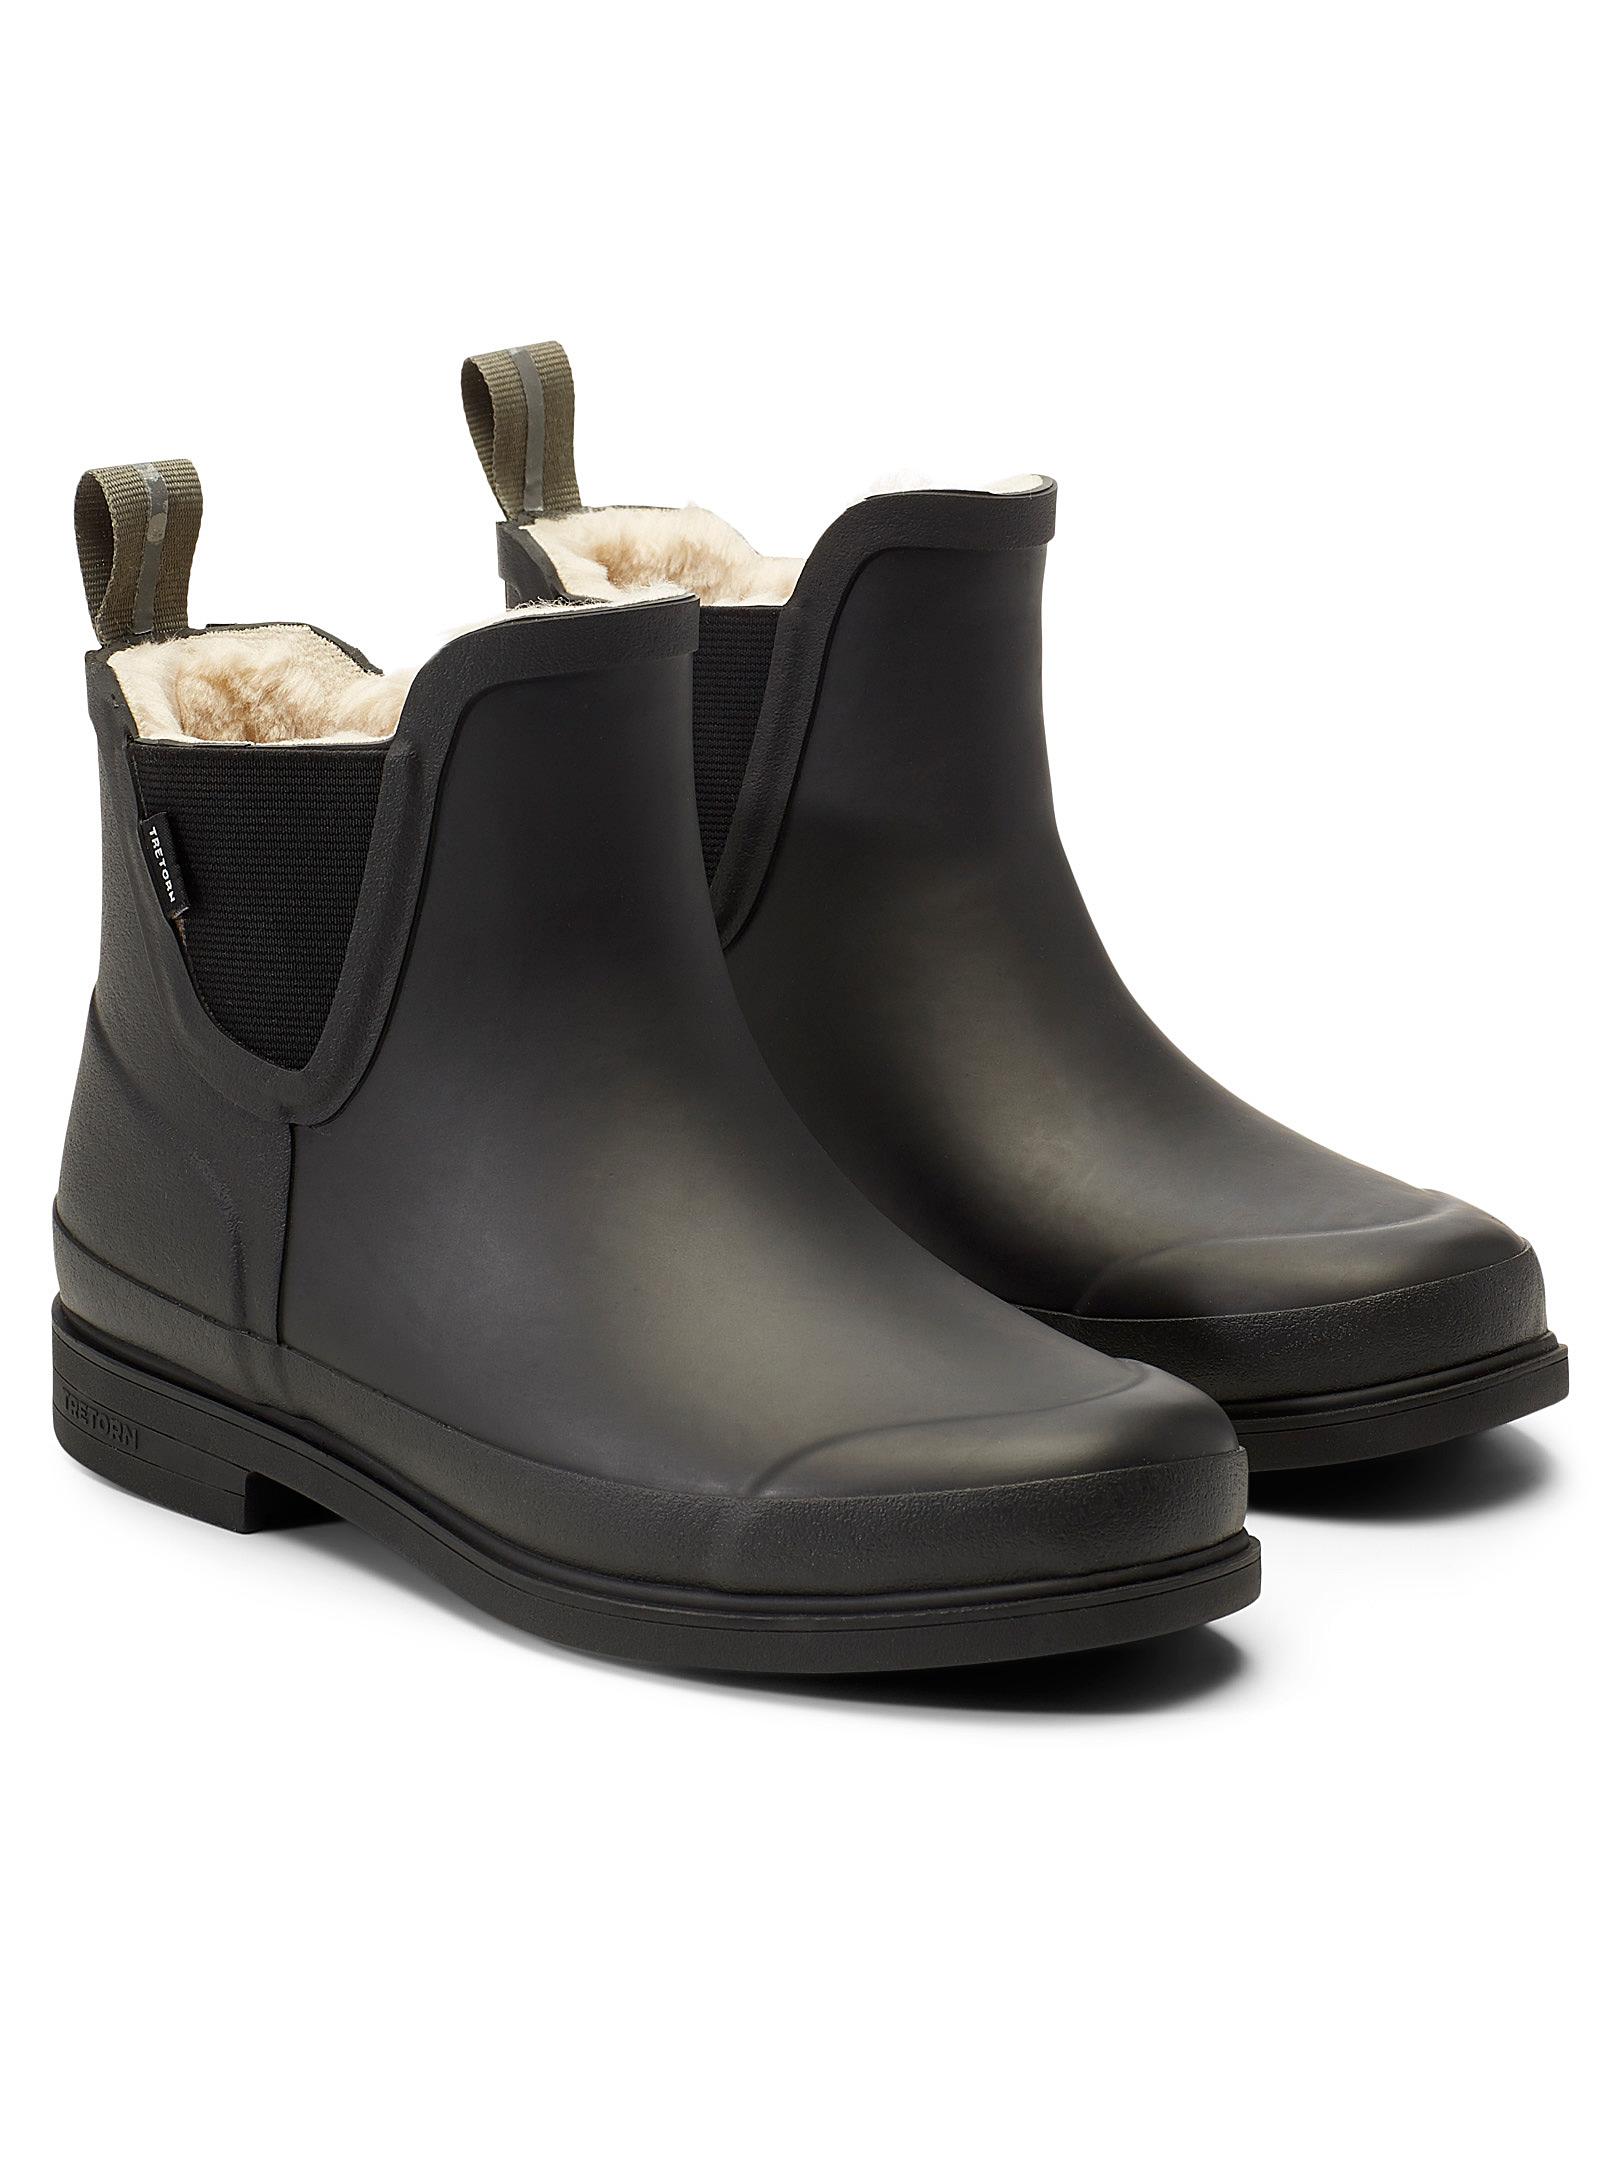 Tretorn Chelsea Eva Winter Boots in Black - Lyst